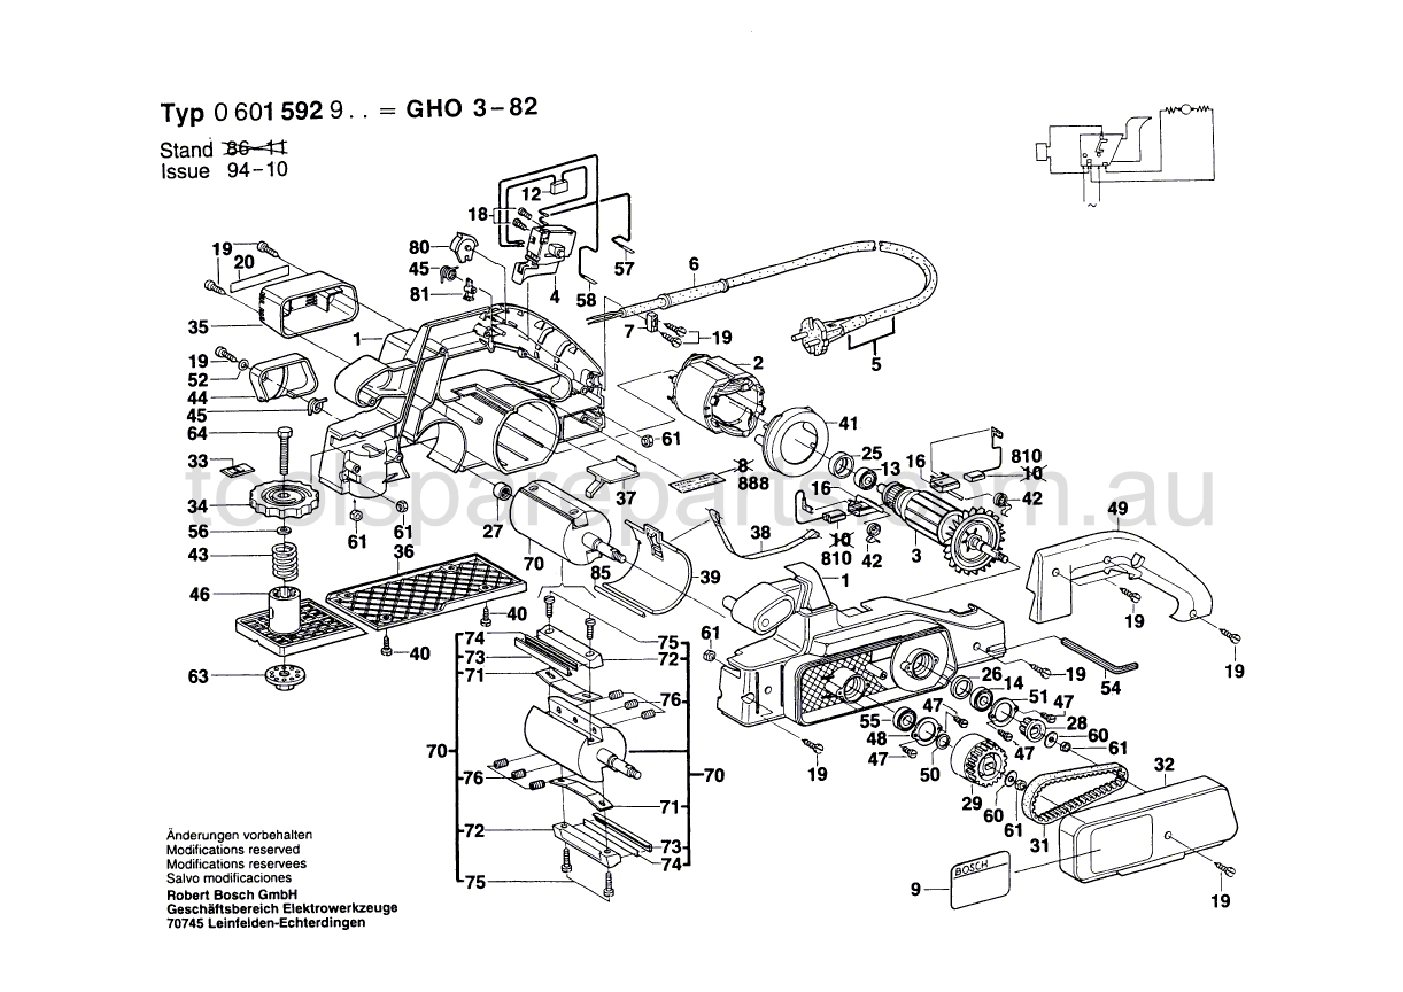 Bosch GHO 3-82 0601592937  Diagram 1